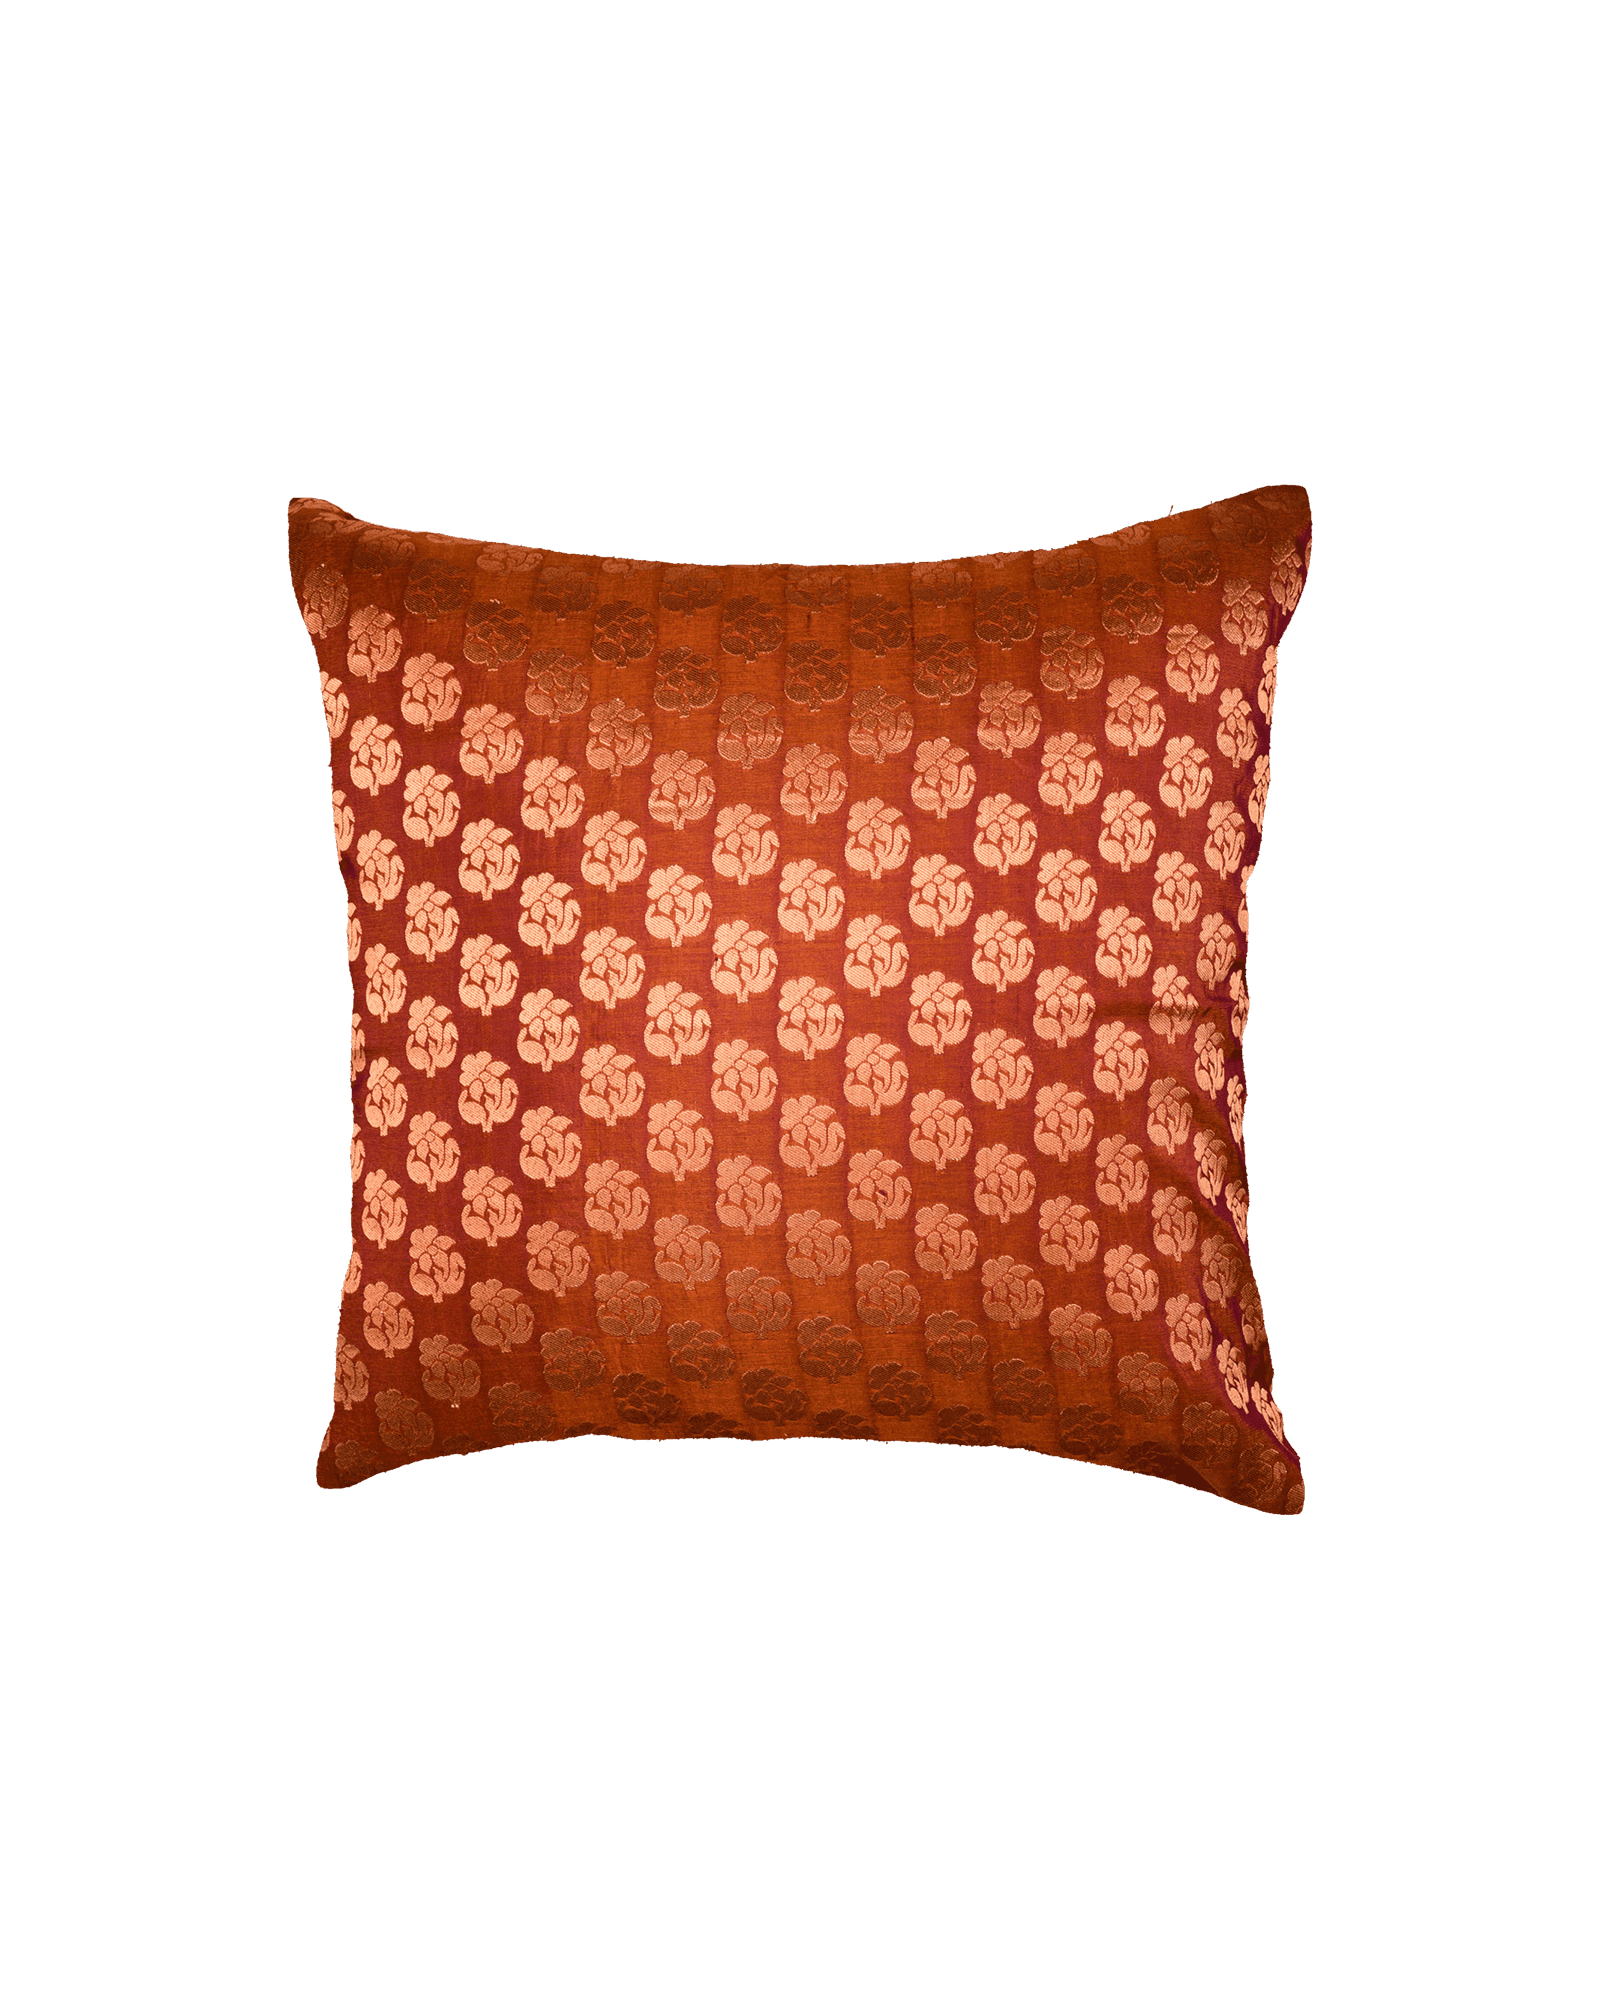 Russet Brown Banarasi Handloom Zari Buti Silk Cushion Cover 16" - By HolyWeaves, Benares